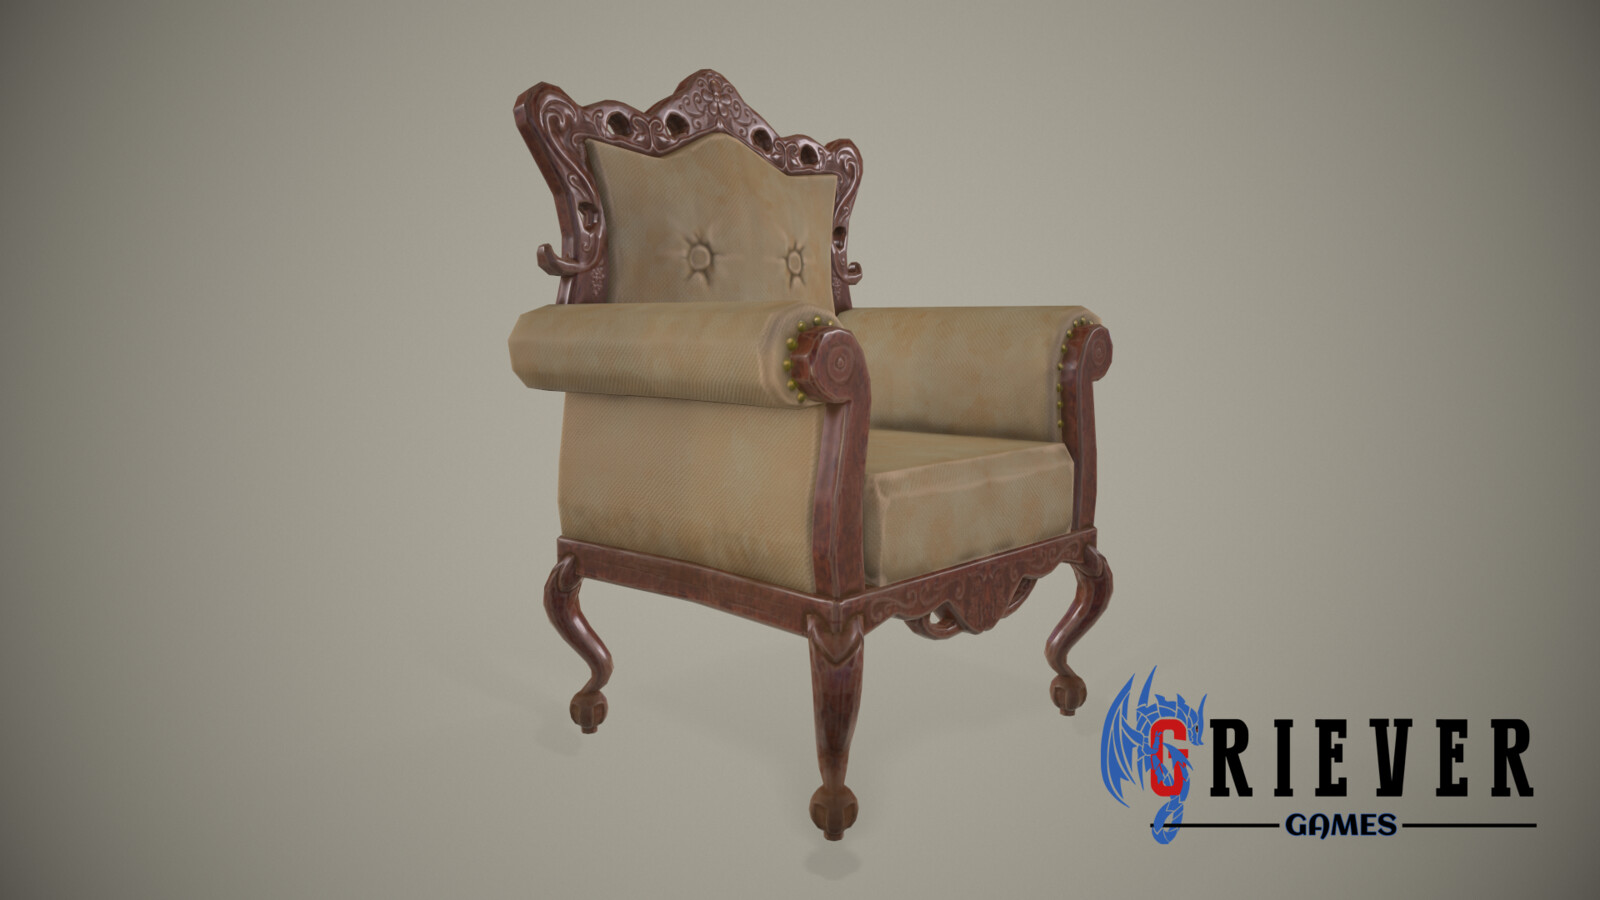 A plush chair with a vineyard motif.